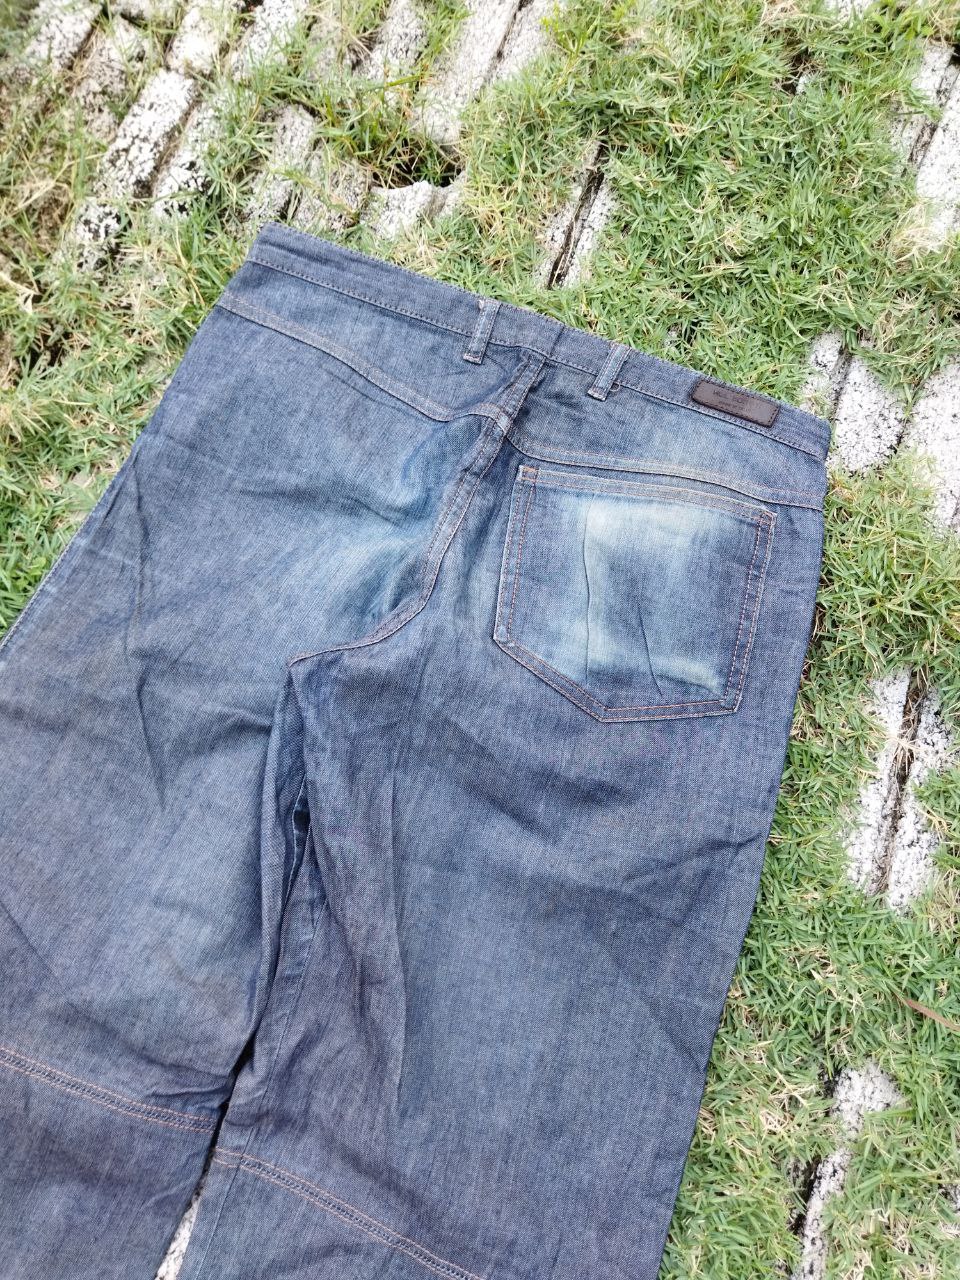 Vintage Neil Barrett Zipper Jeans - 12